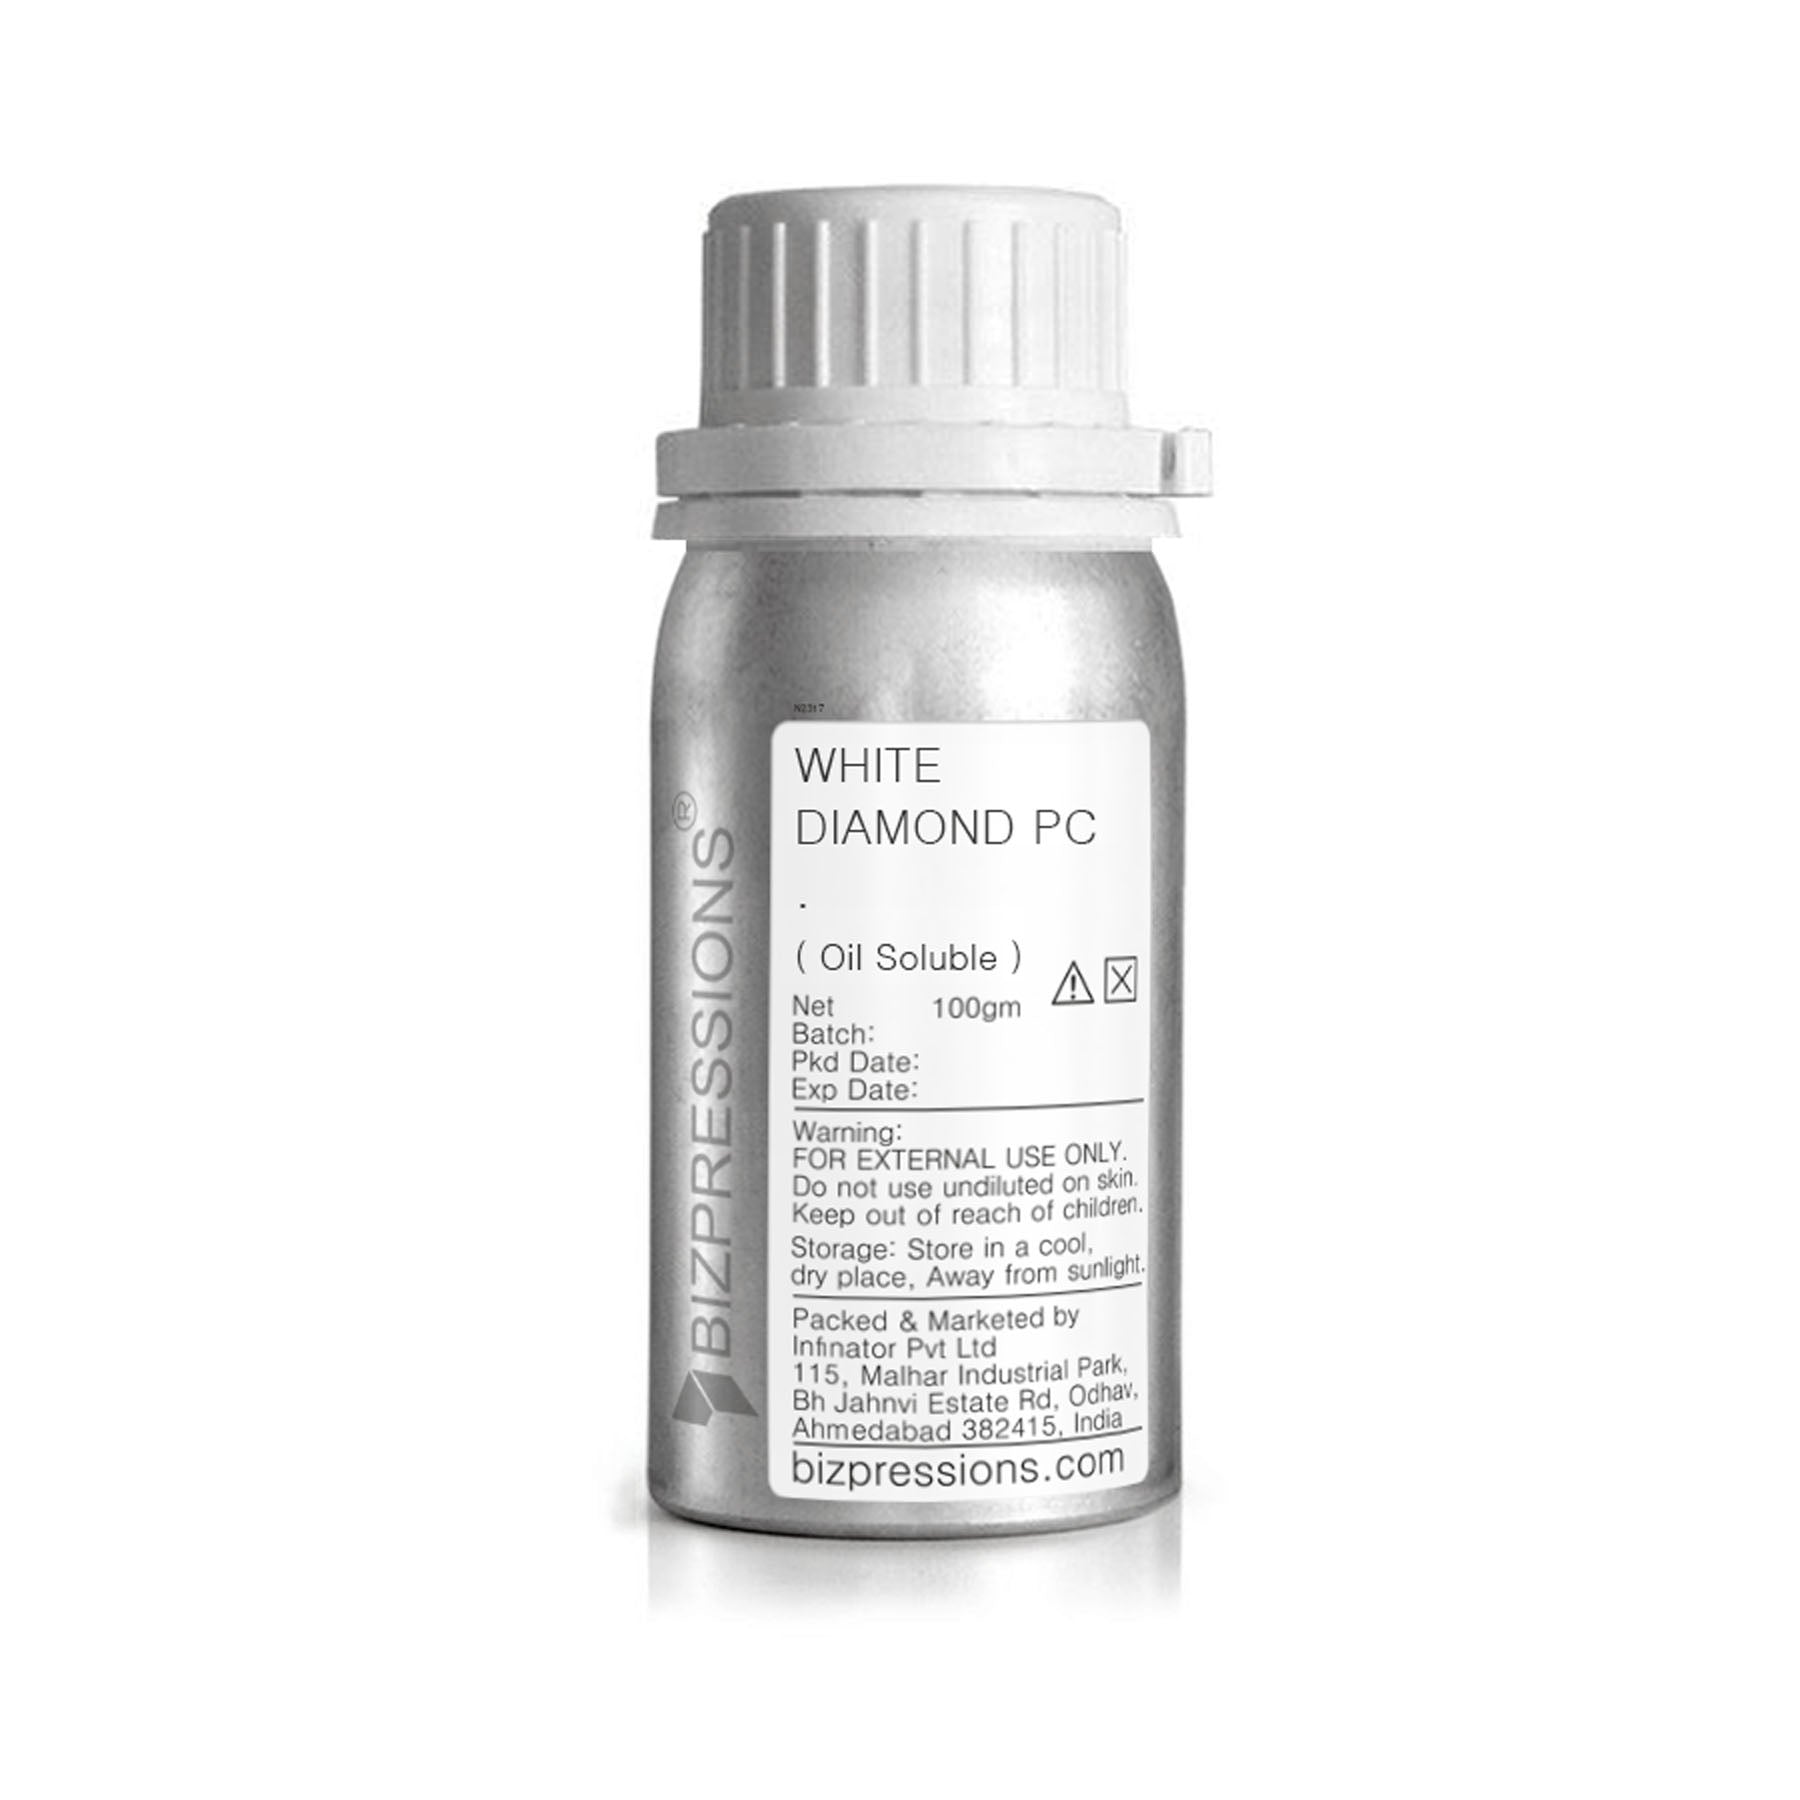 WHITE DIAMOND PC - Fragrance ( Oil Soluble ) - 100 gm